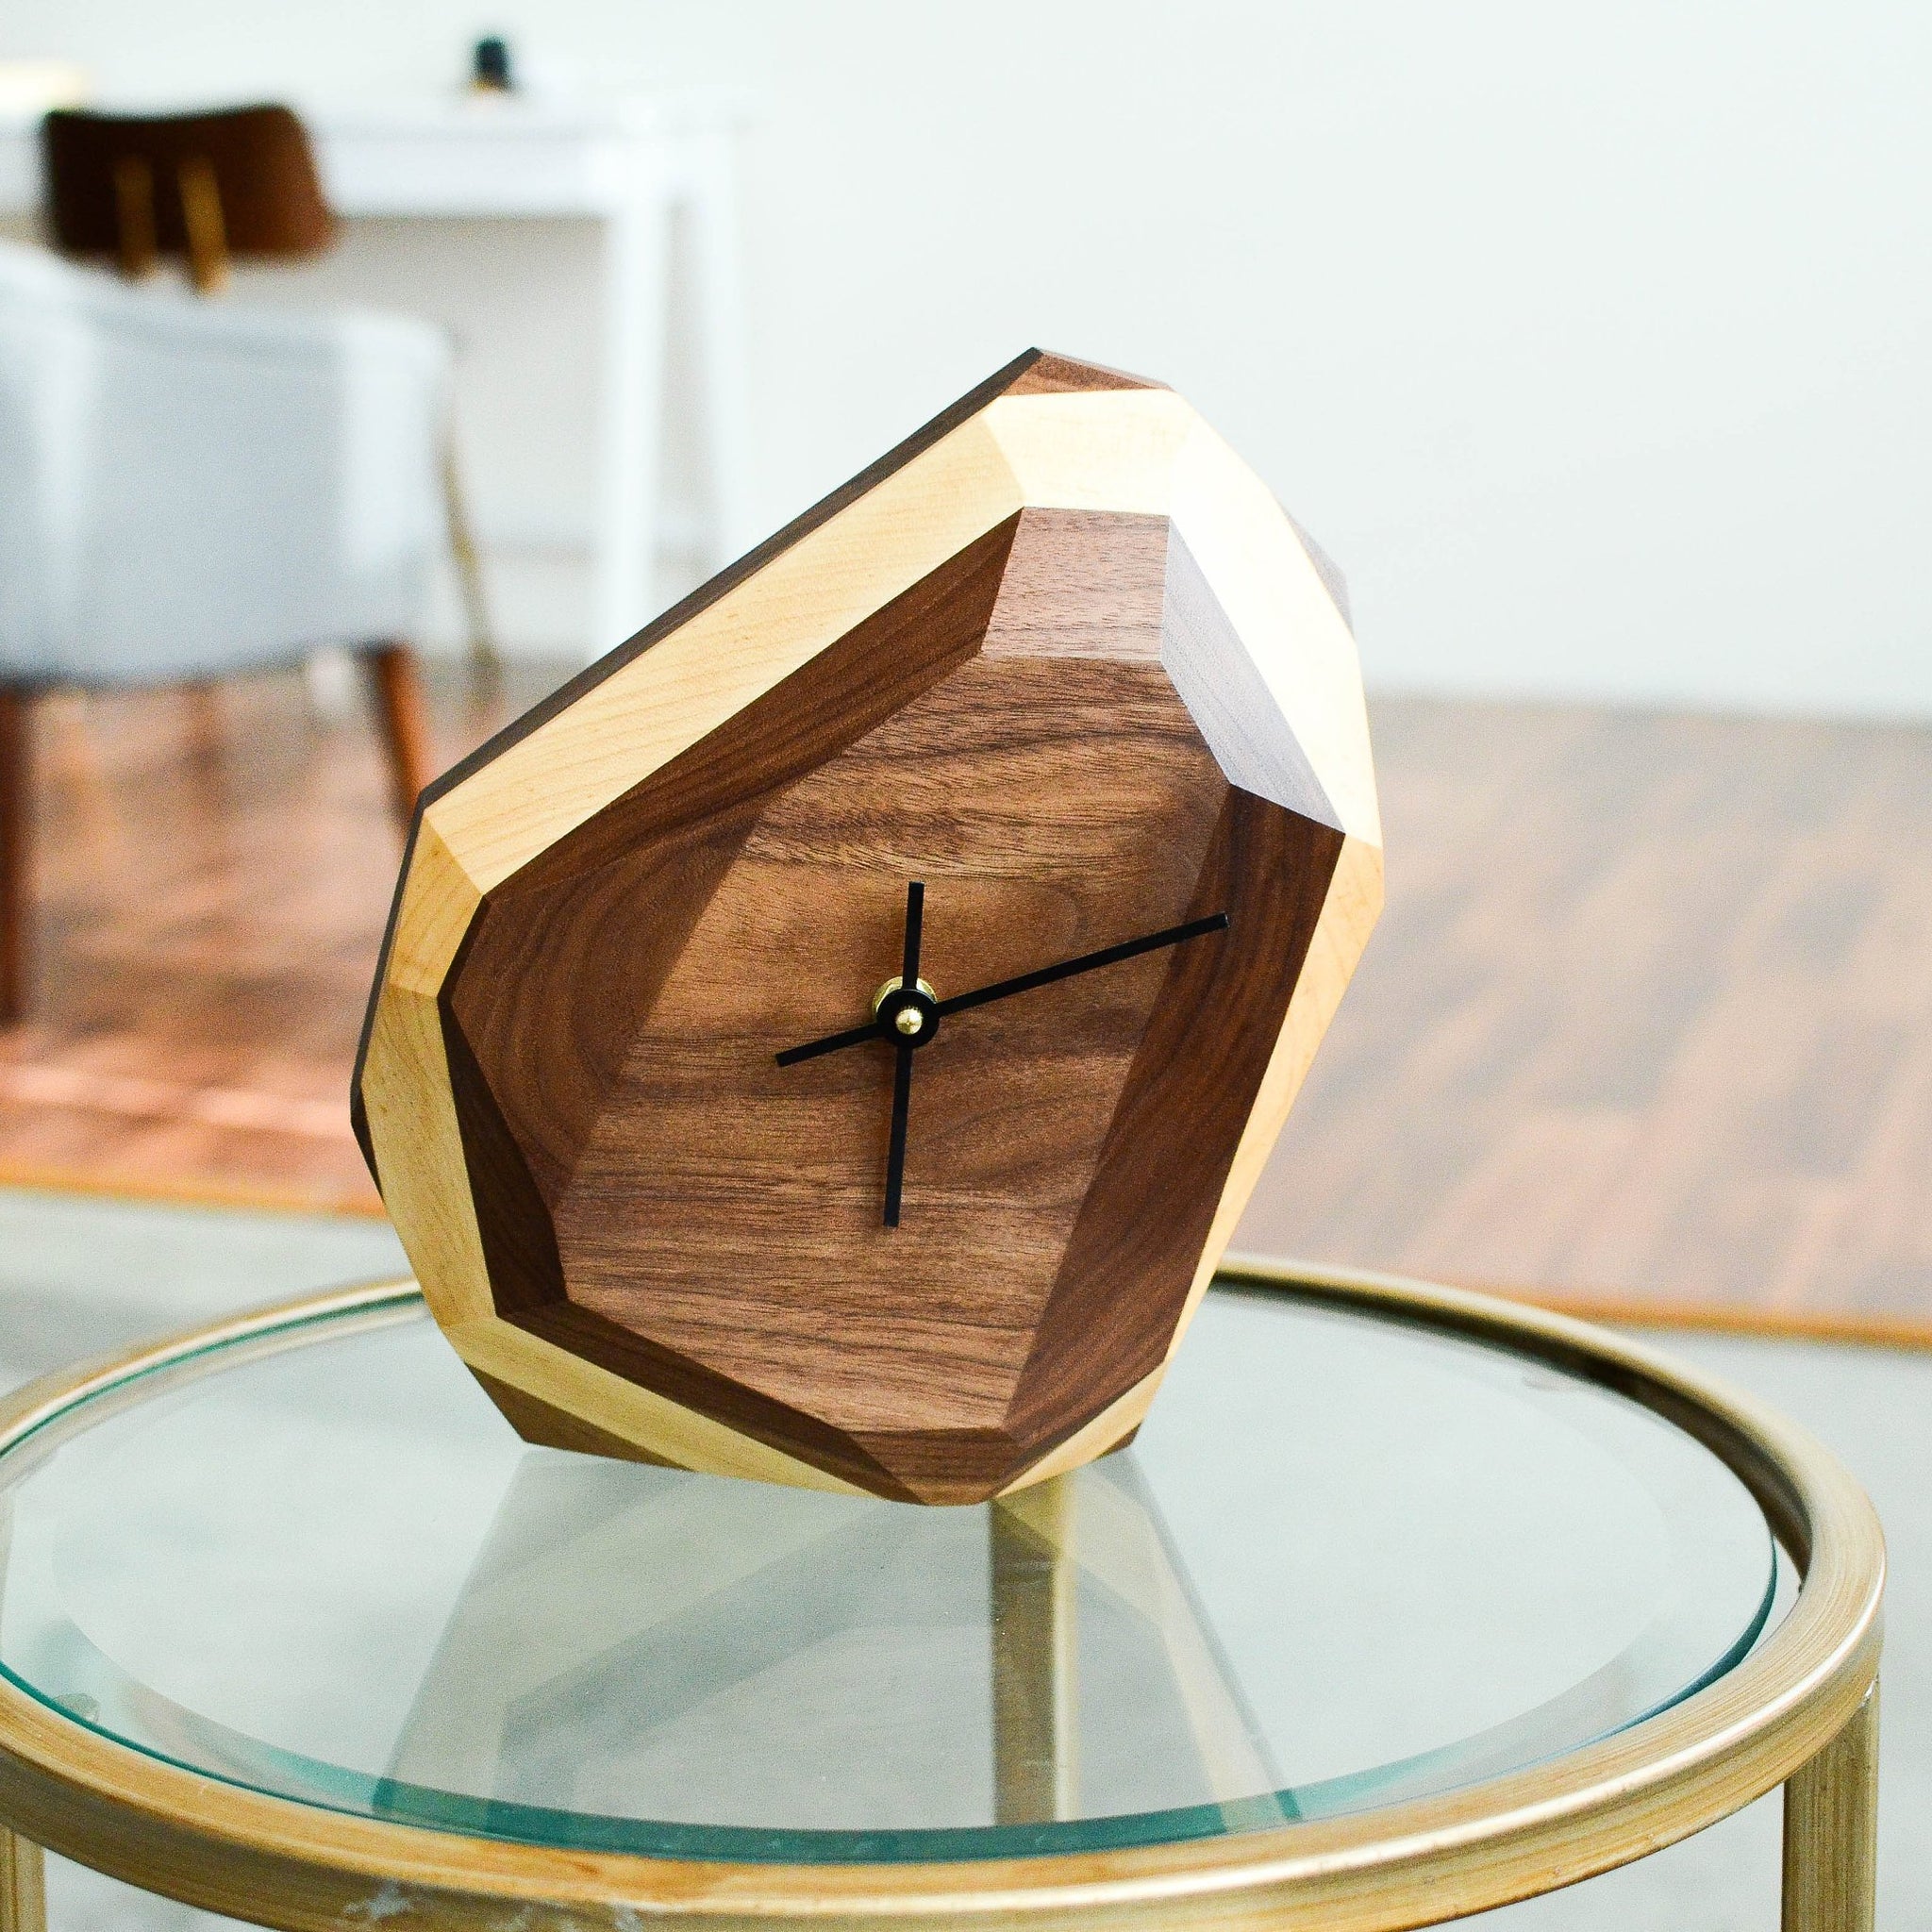 Geometric Wall & Table Clock